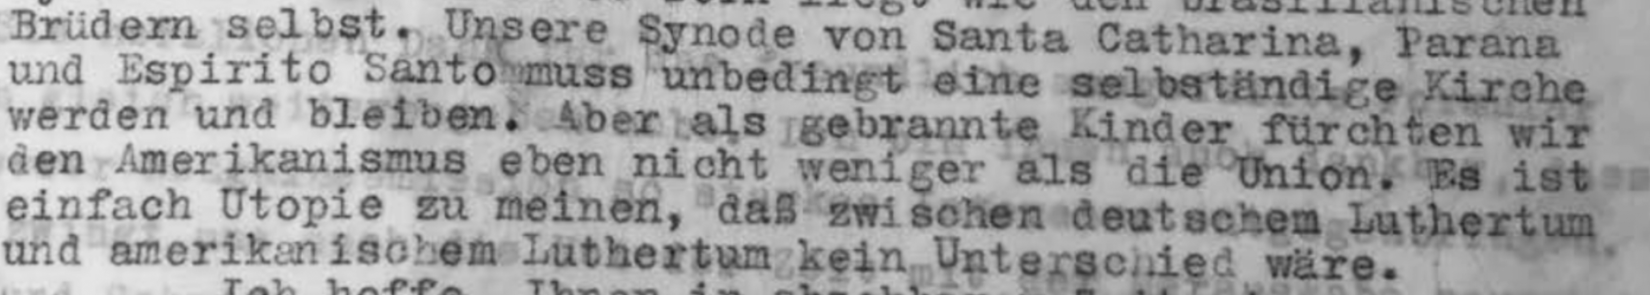 Letter from Friedrich Eppelein to Georg Weger, 1931